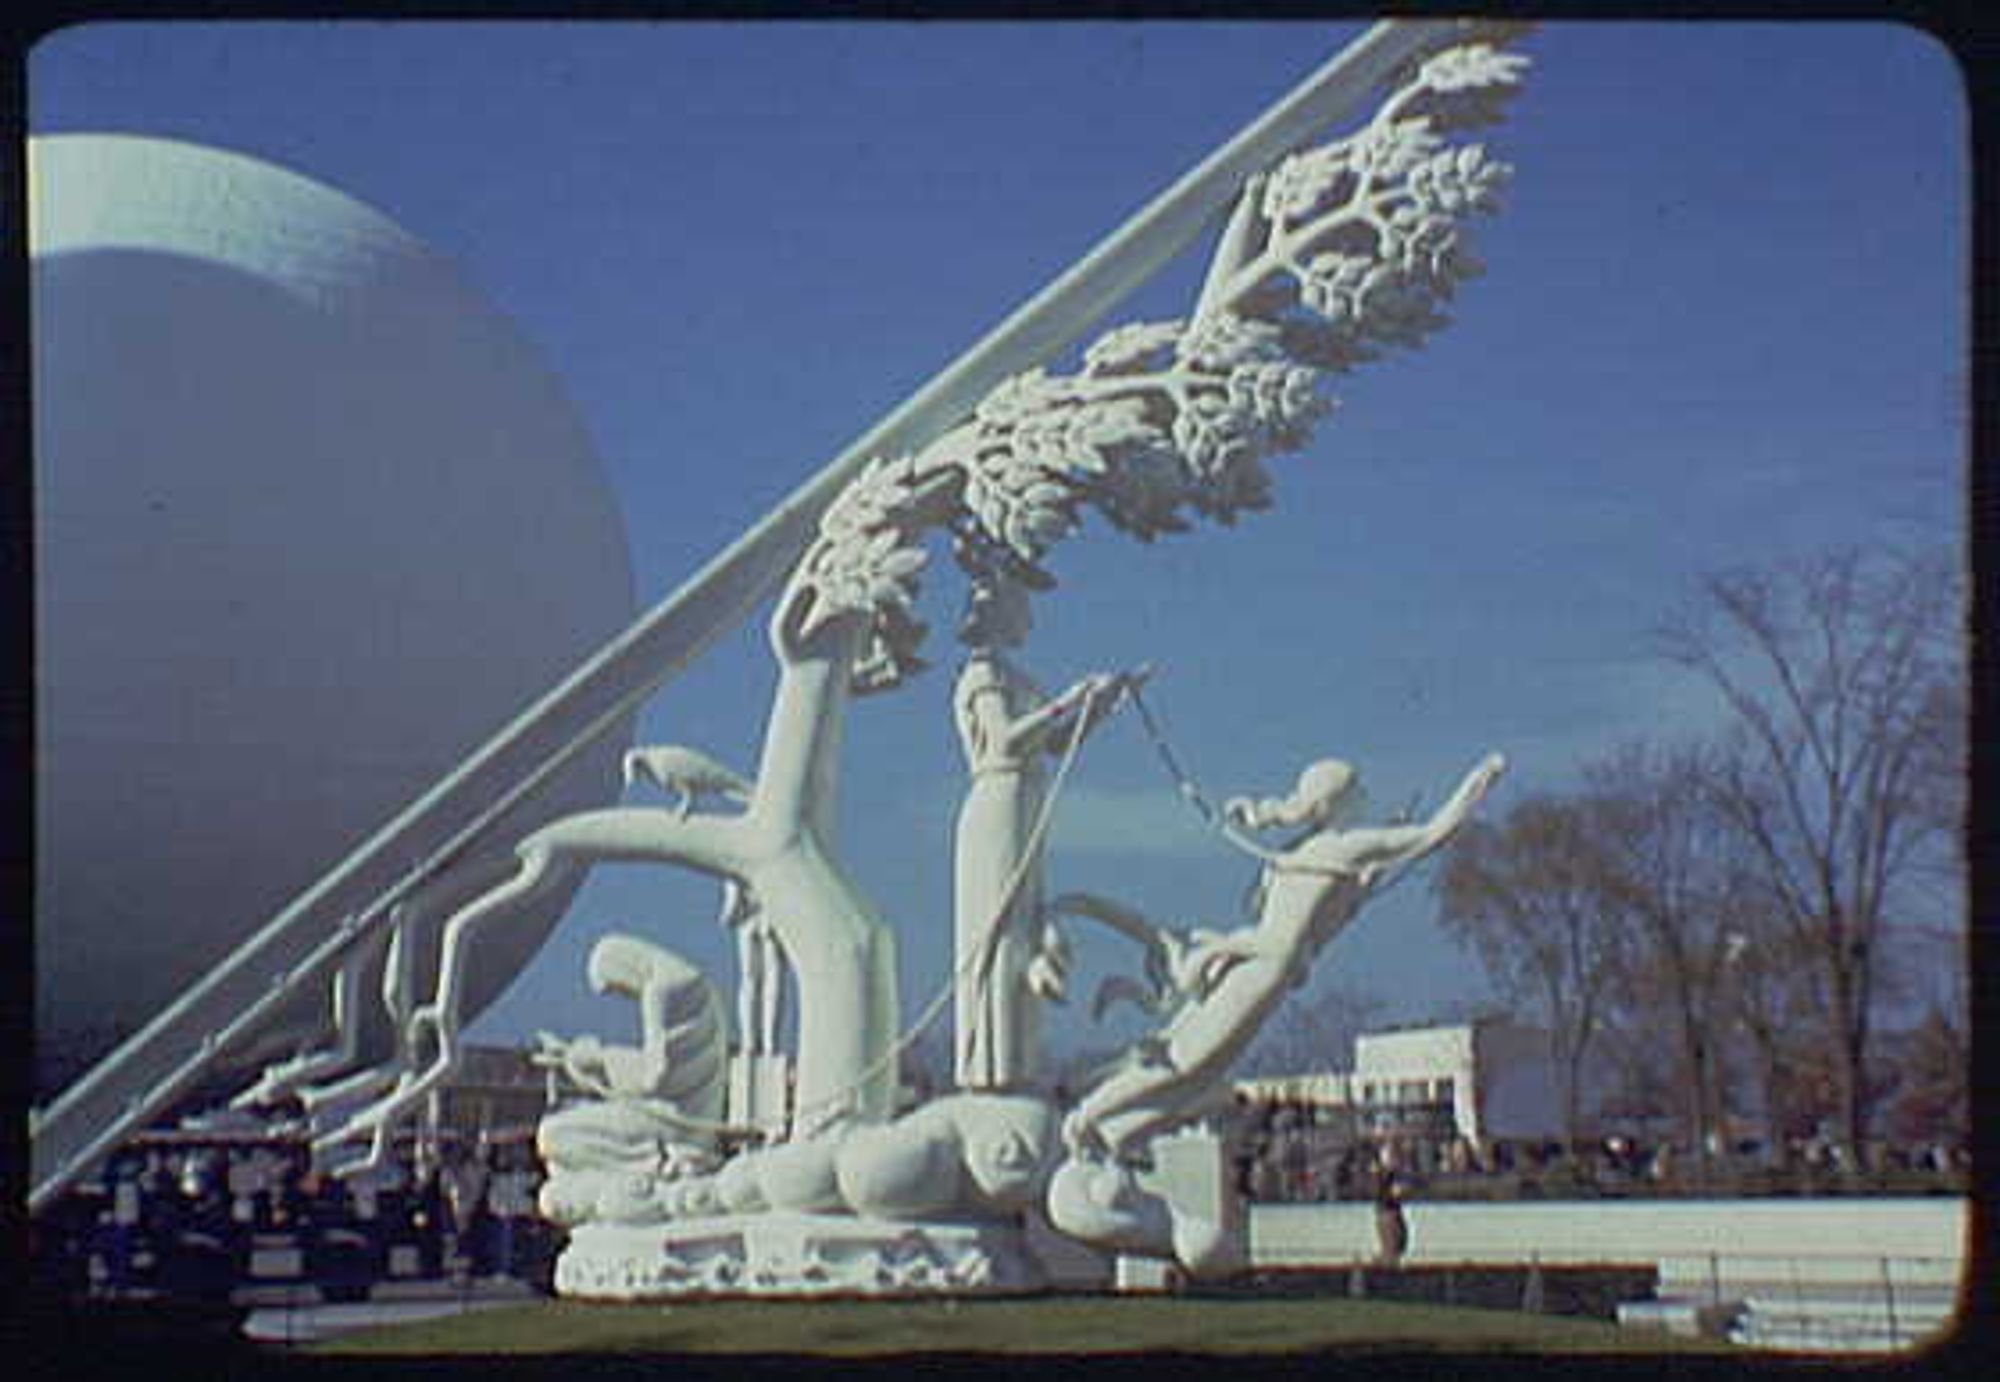 A large, sculptural sundial